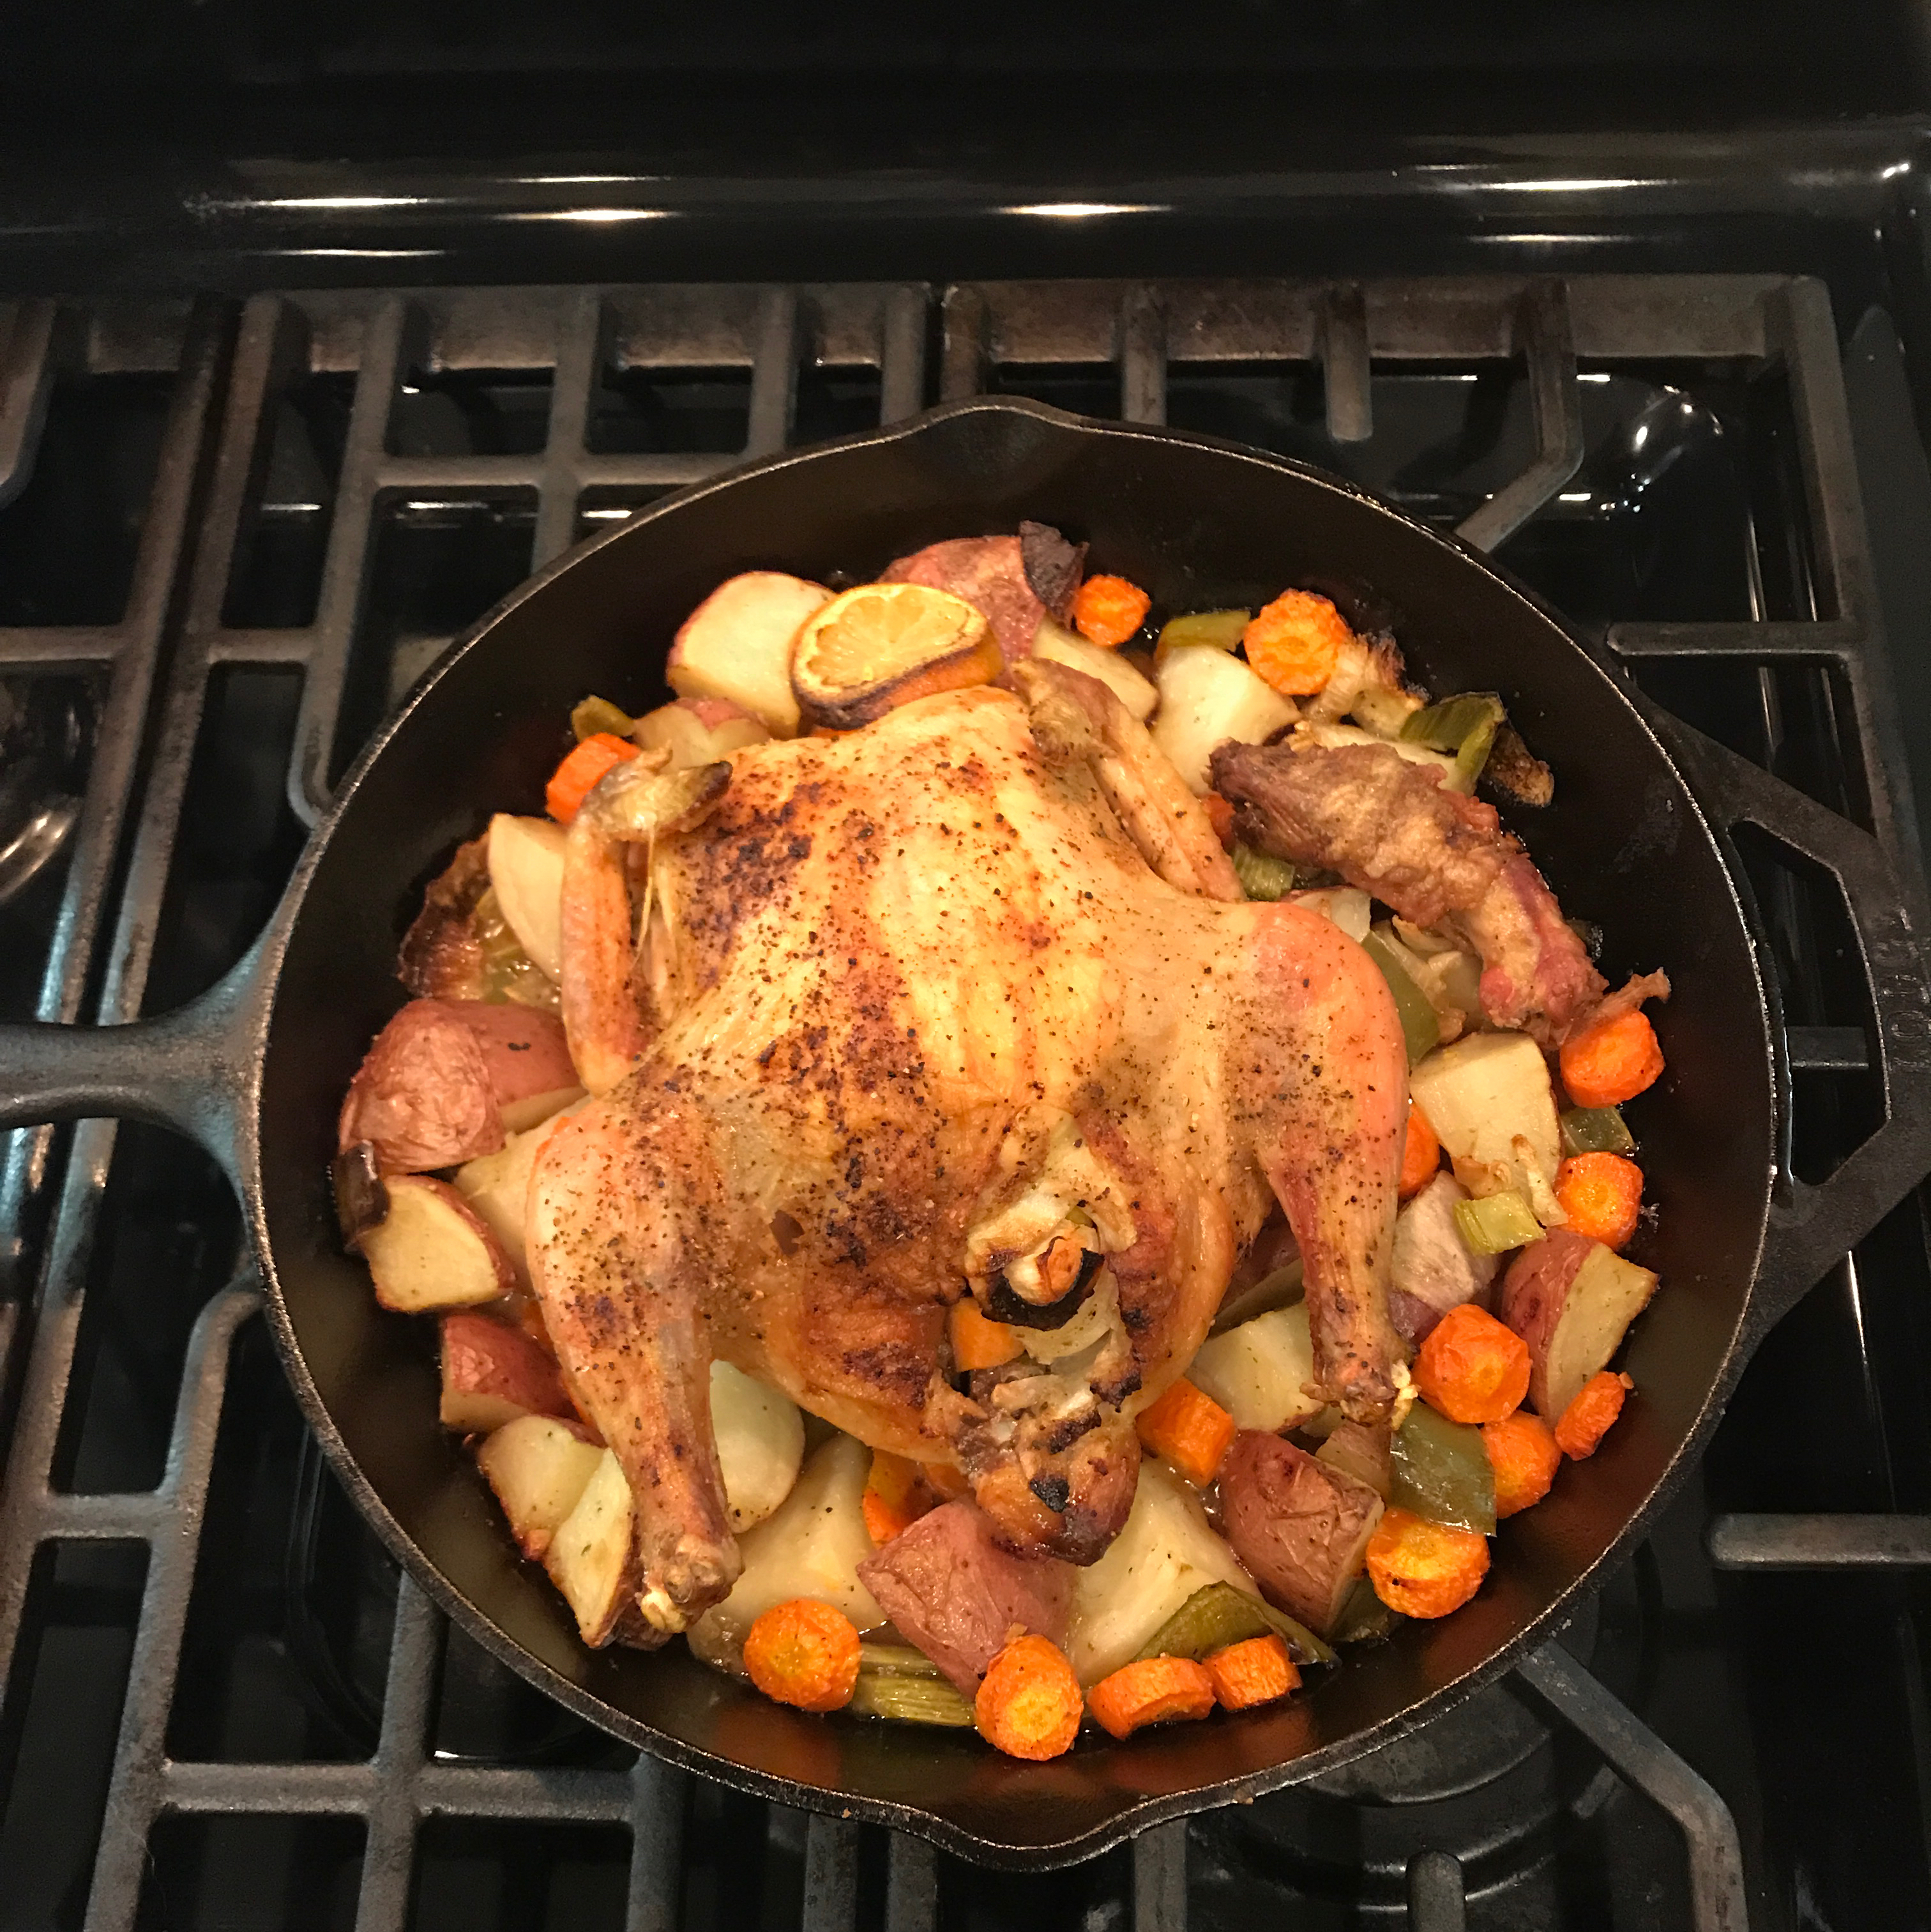 Roast Chicken And Vegetables Recipe Allrecipes,Small Corner Kitchen Cabinet Ideas